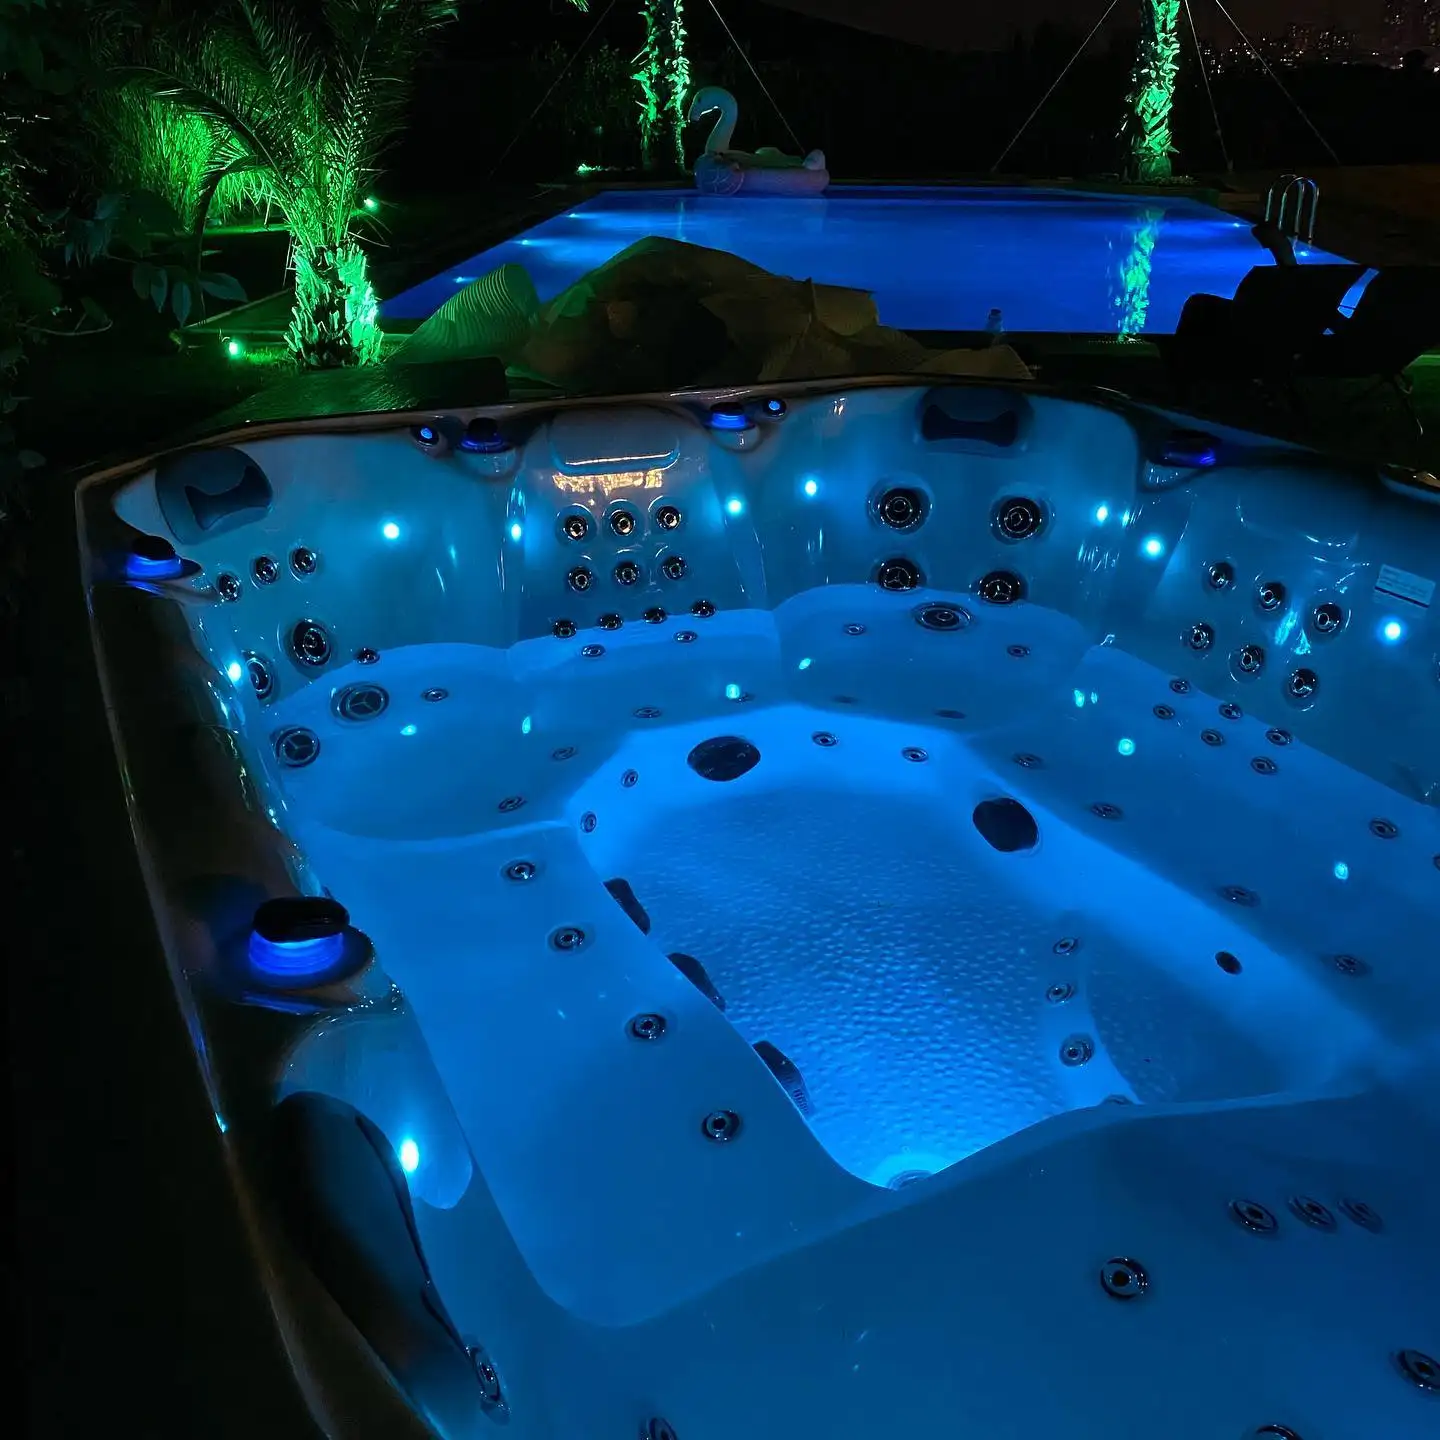 Sunrans Spa Hot Tubs 8 Person Whirlpool Outdoor Spa Bath Tubs Acrylic Hottub Bathtubs for Family